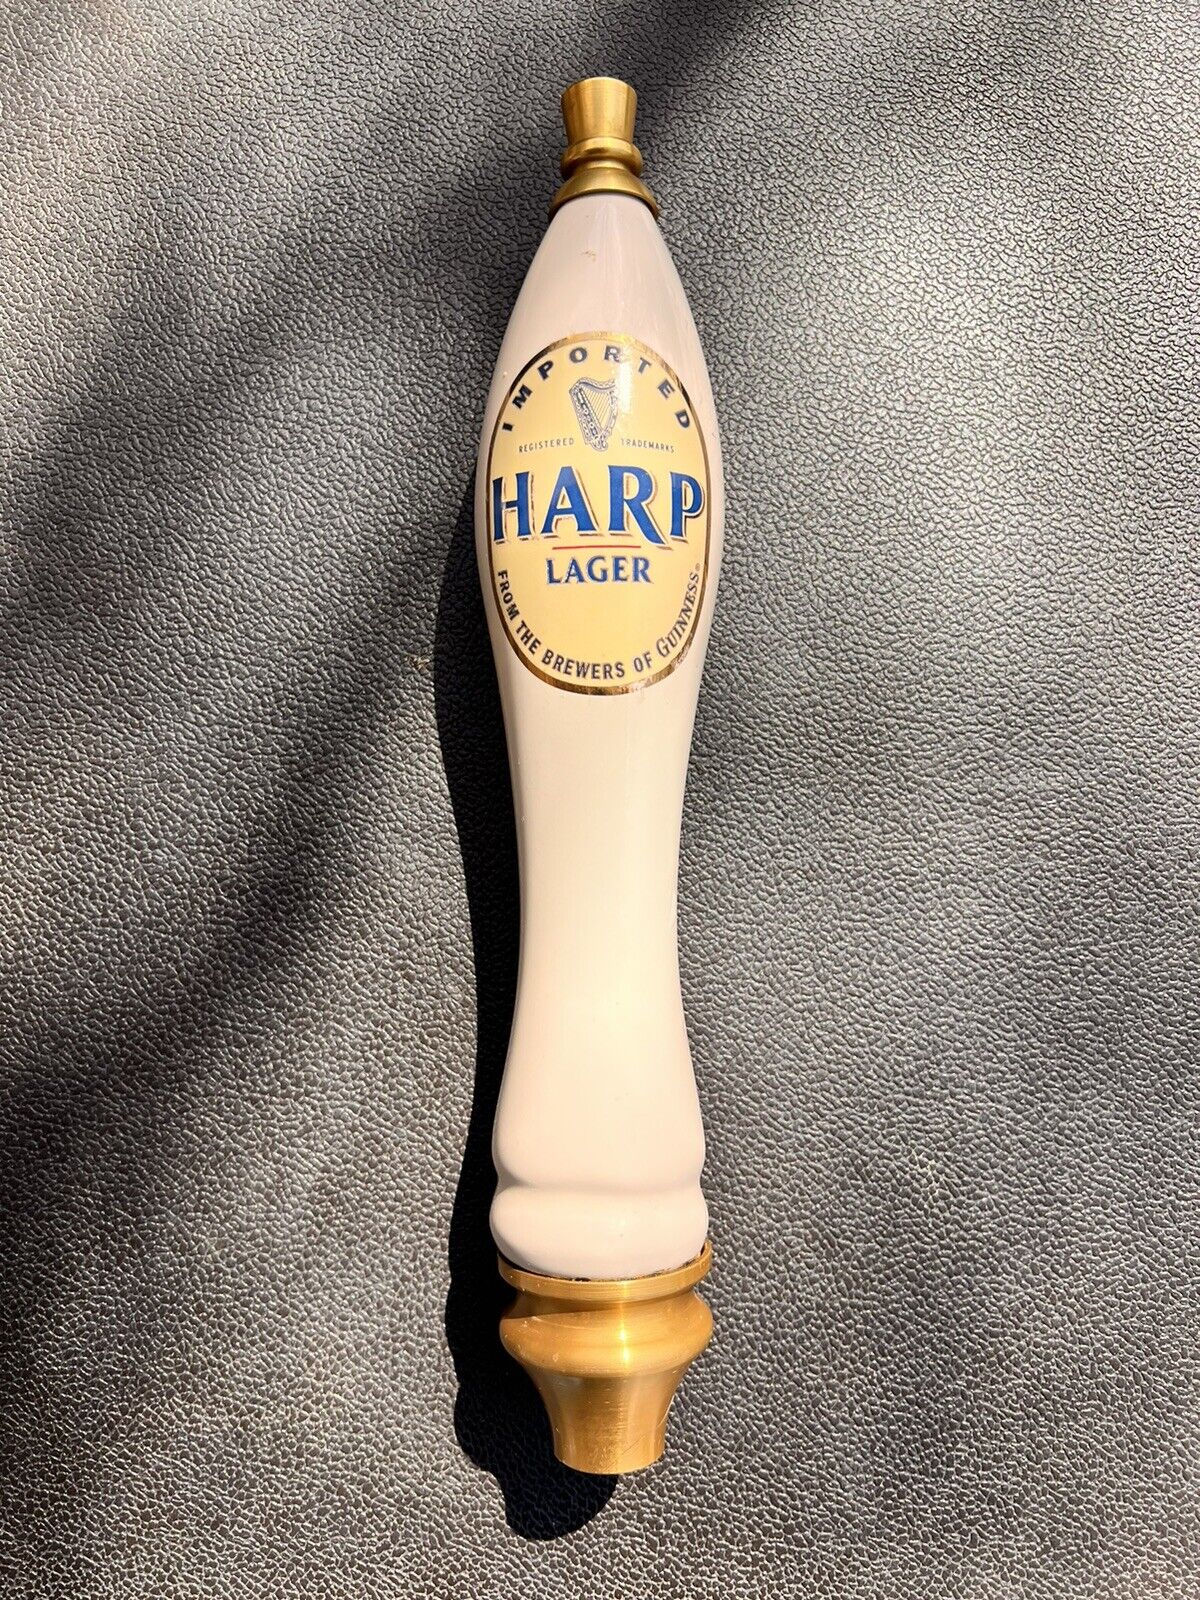 HARP LAGER Ceramic pub style beer tap handle